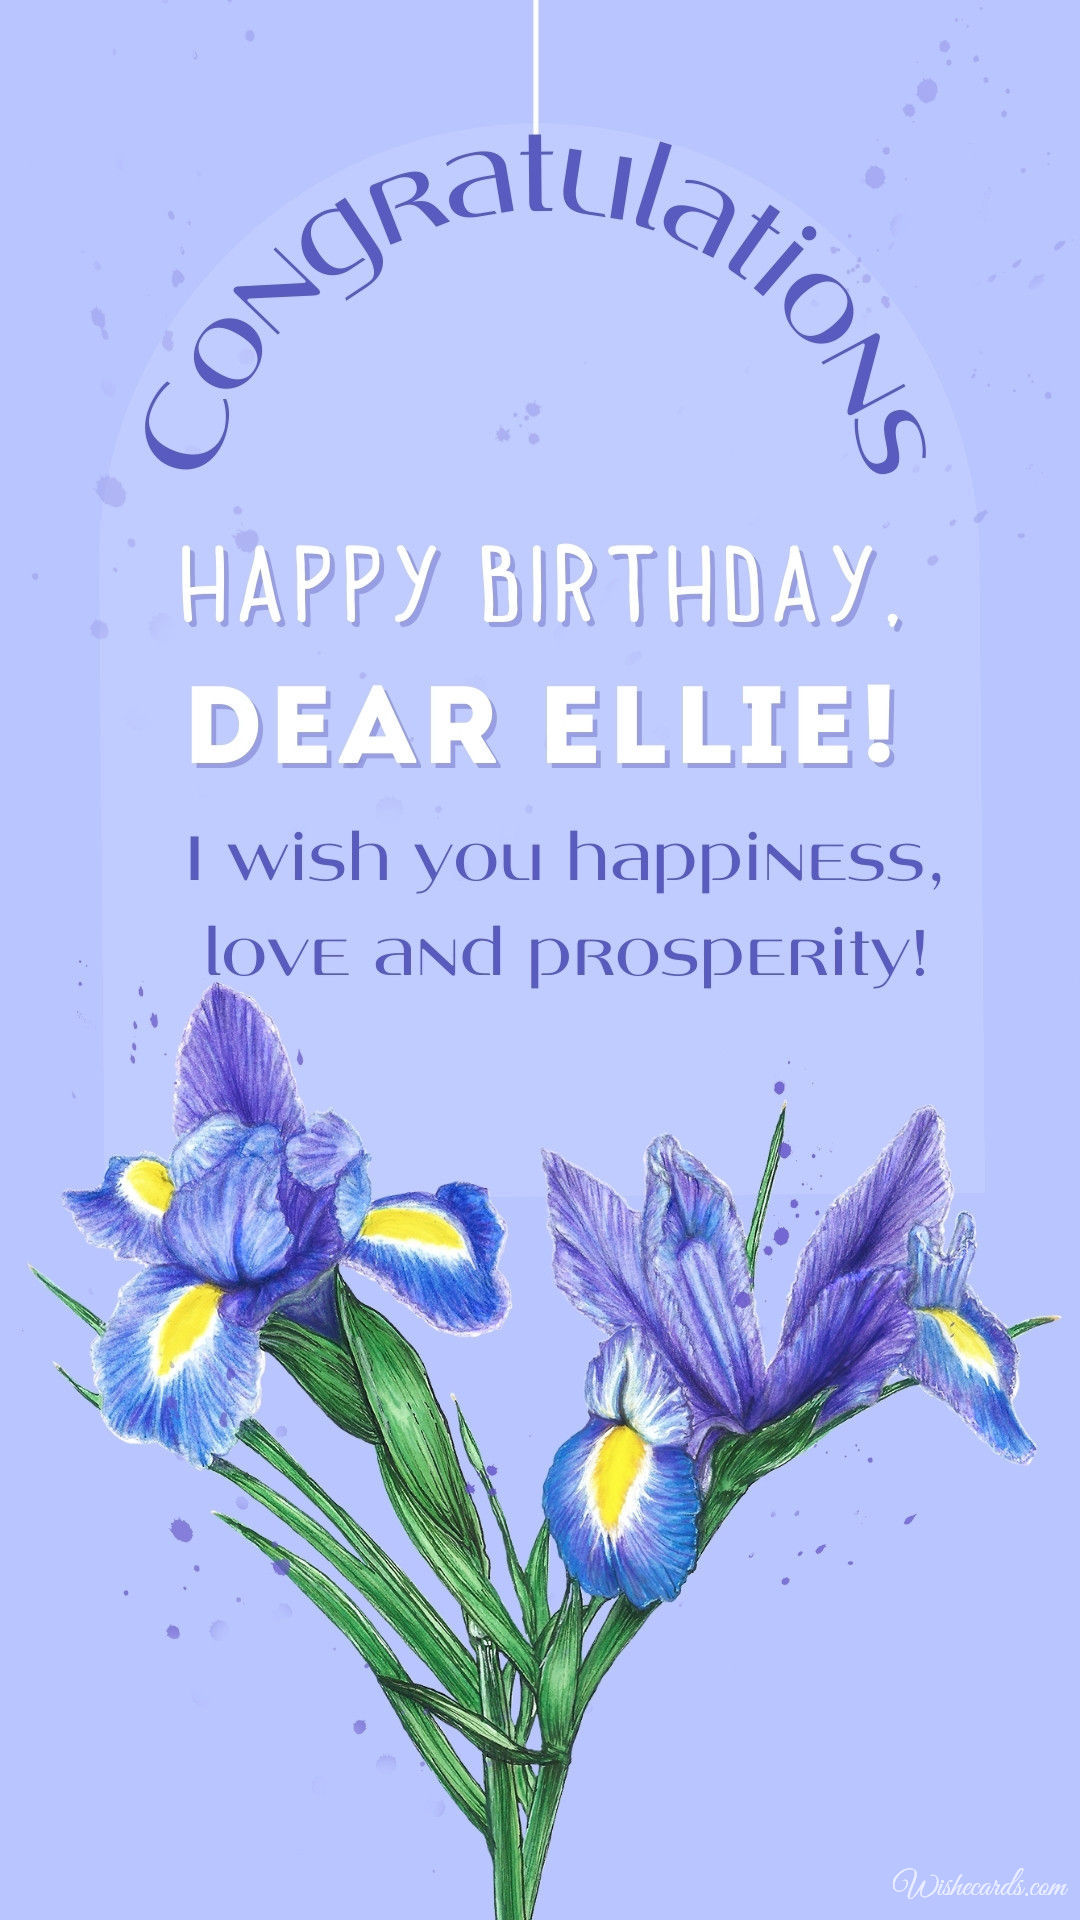 Happy Birthday Ellie Image